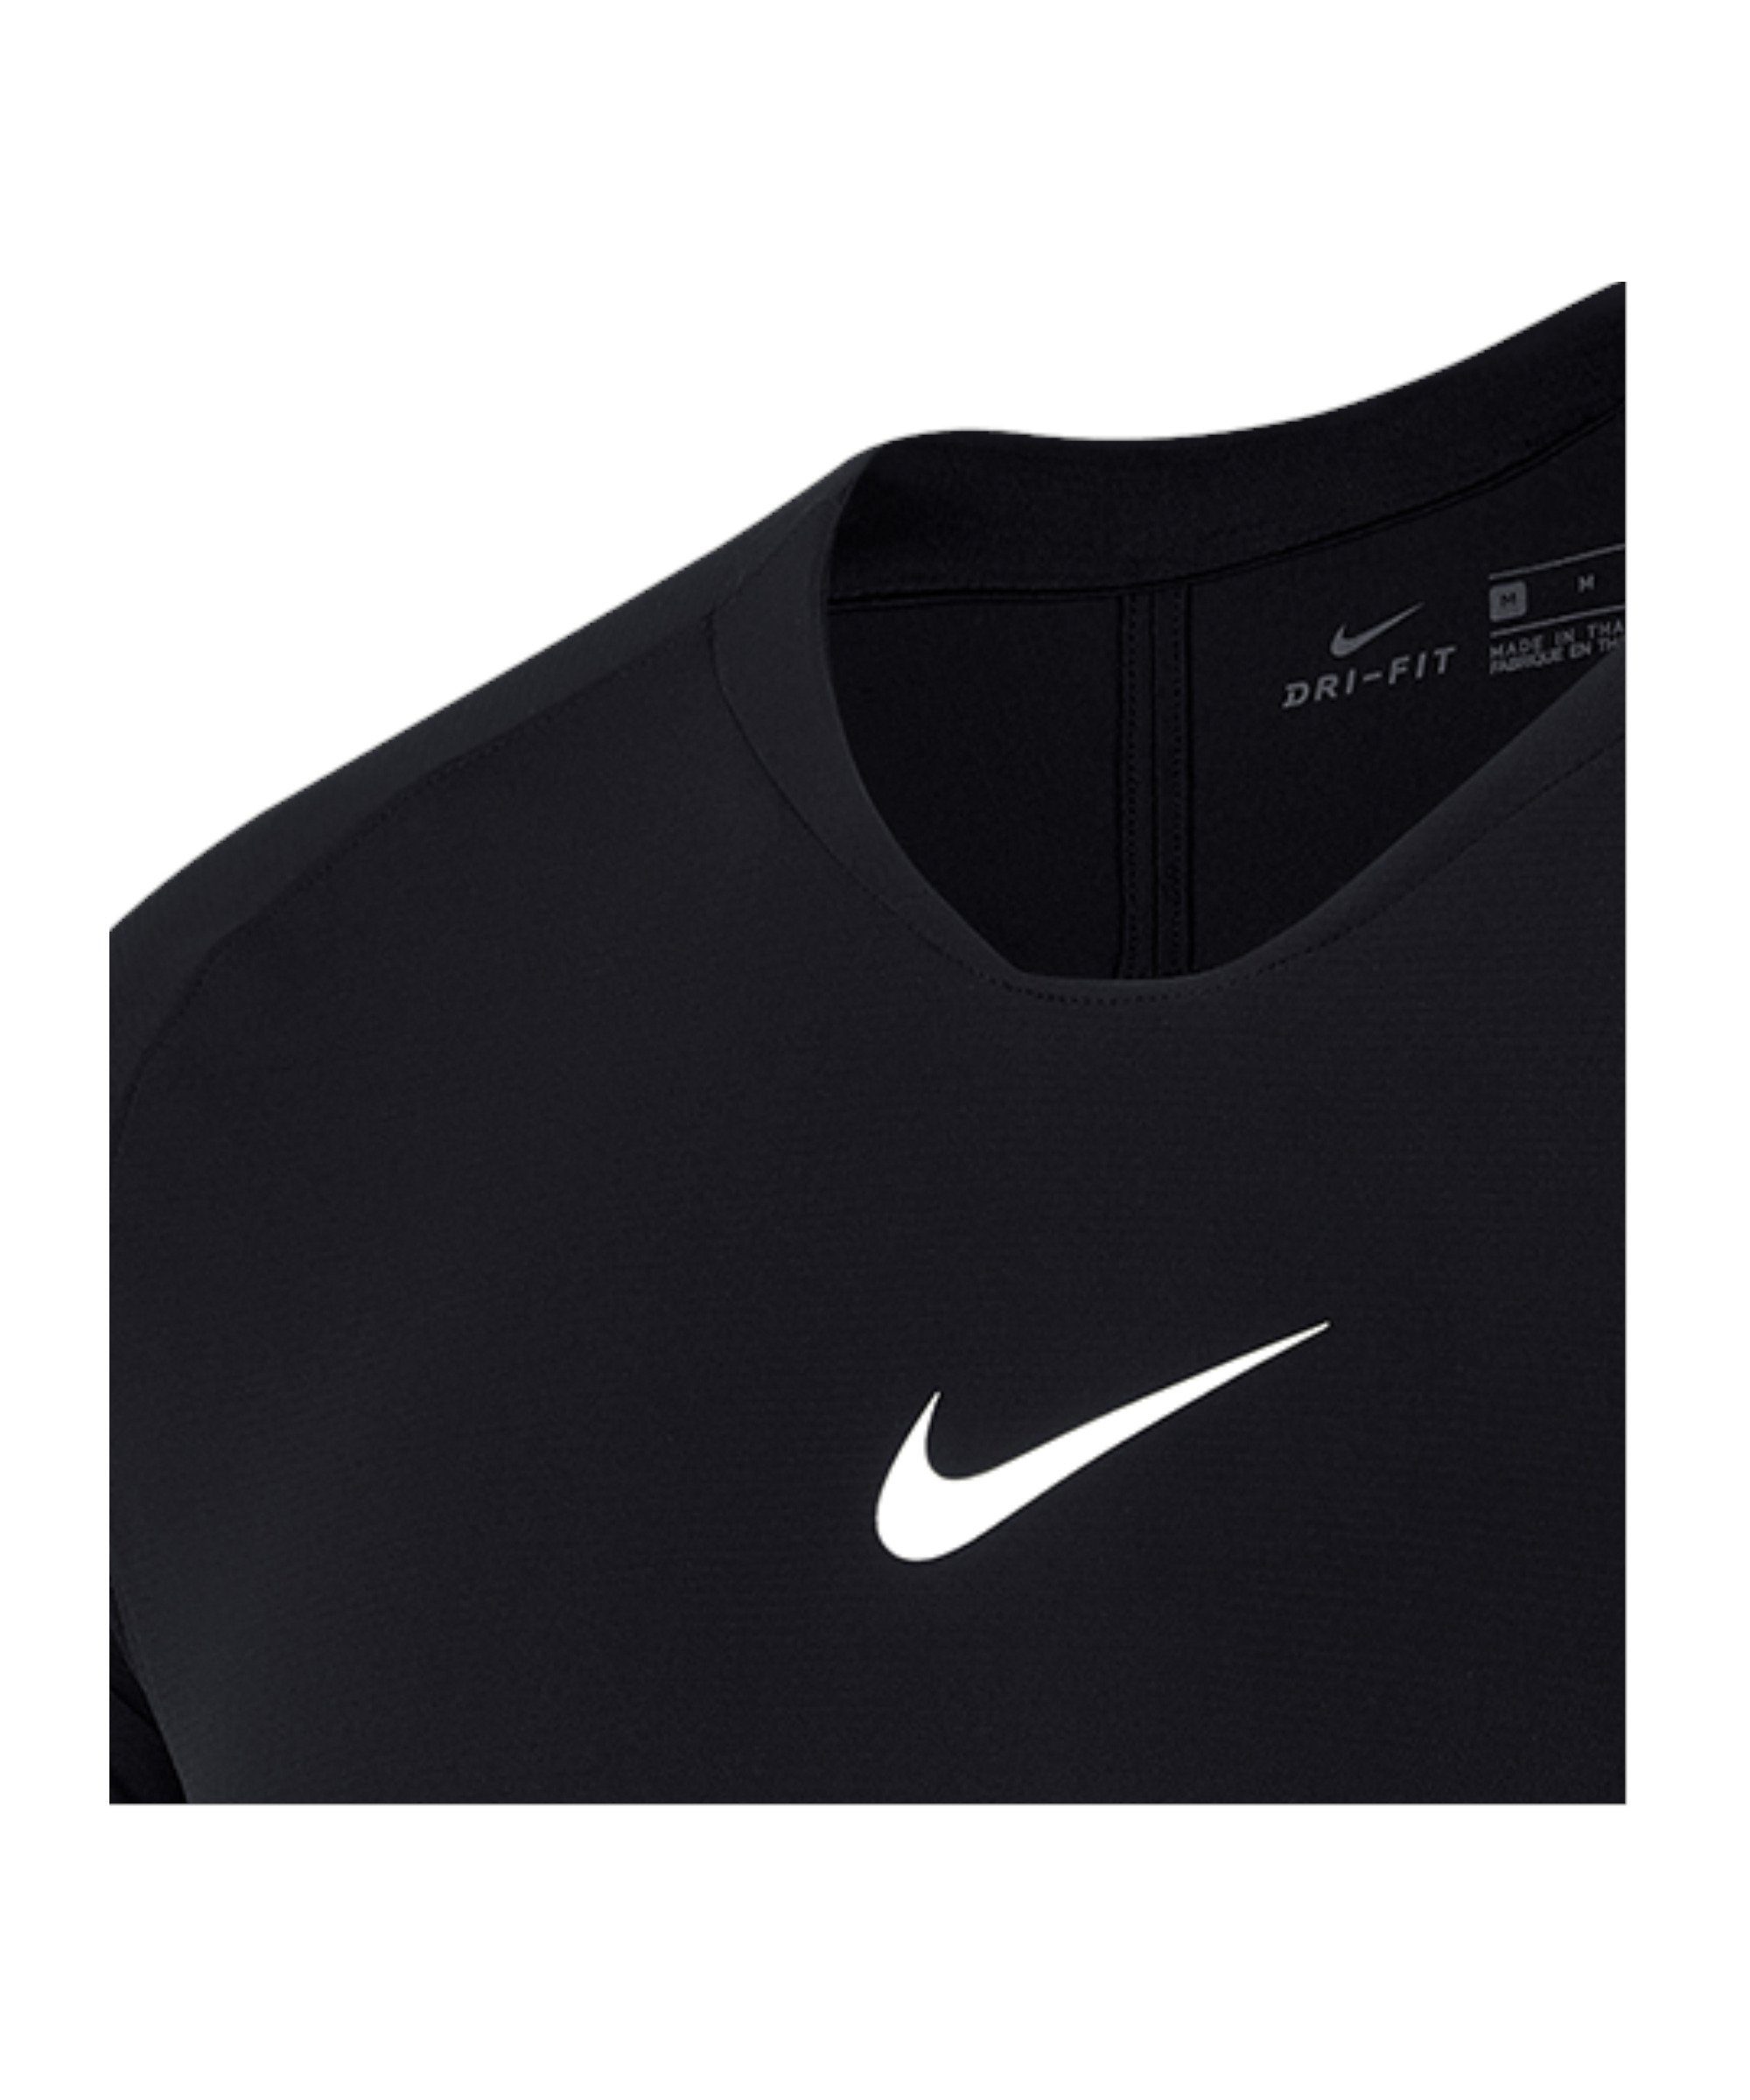 Nike Funktionsshirt Park schwarzweiss Top Kids Daumenöffnung Layer First